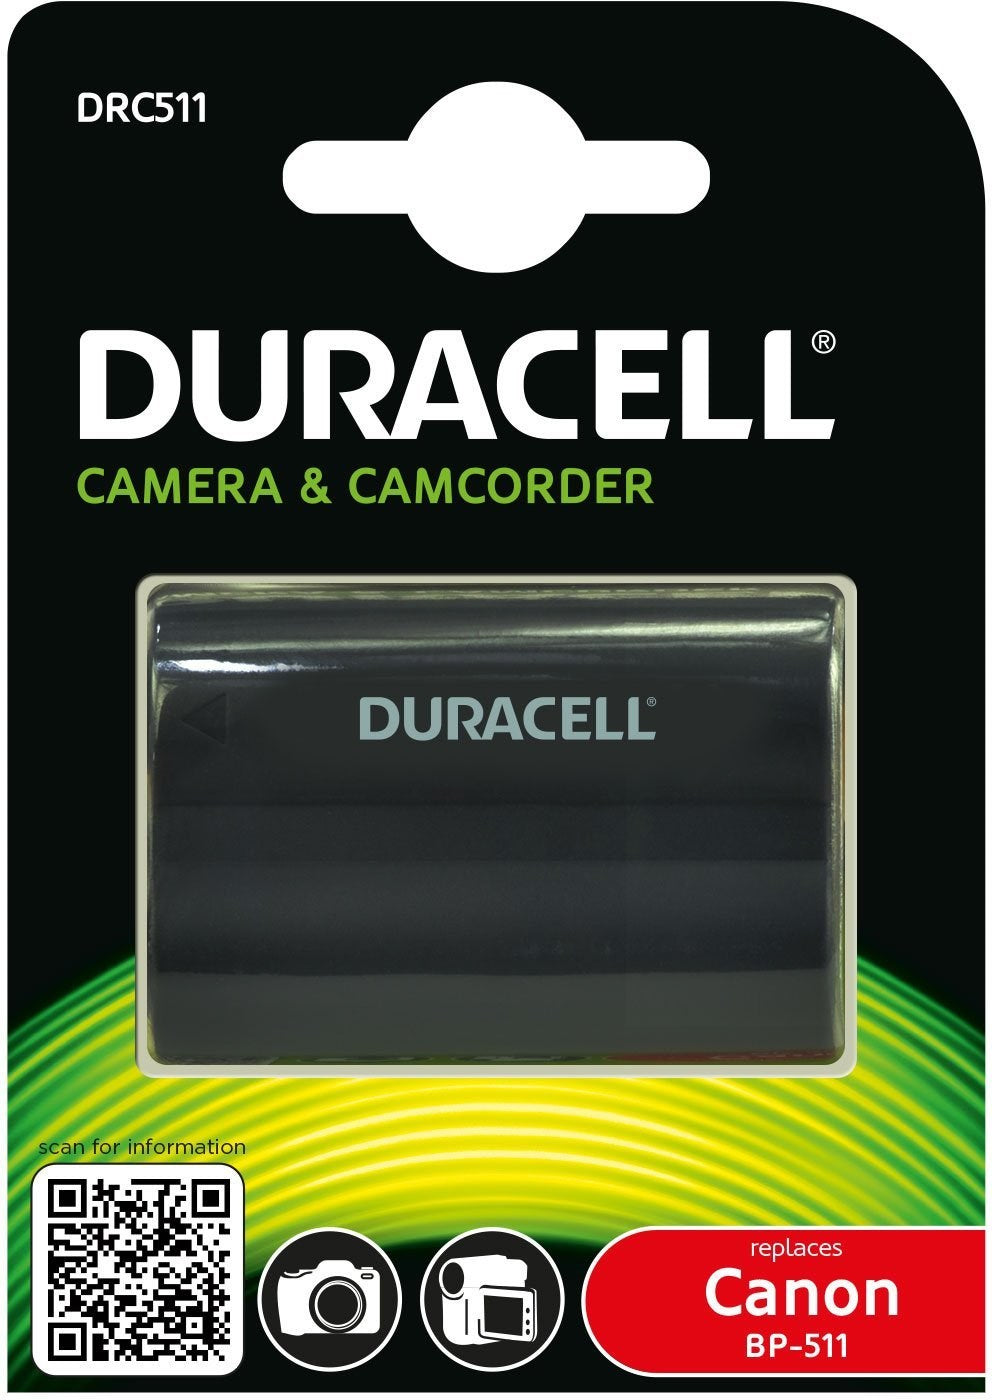 Product Image of Duracell Canon Fit 1400mAh Battery for BP-508 BP-511 BP-512 BP-514 BP-522 P-535